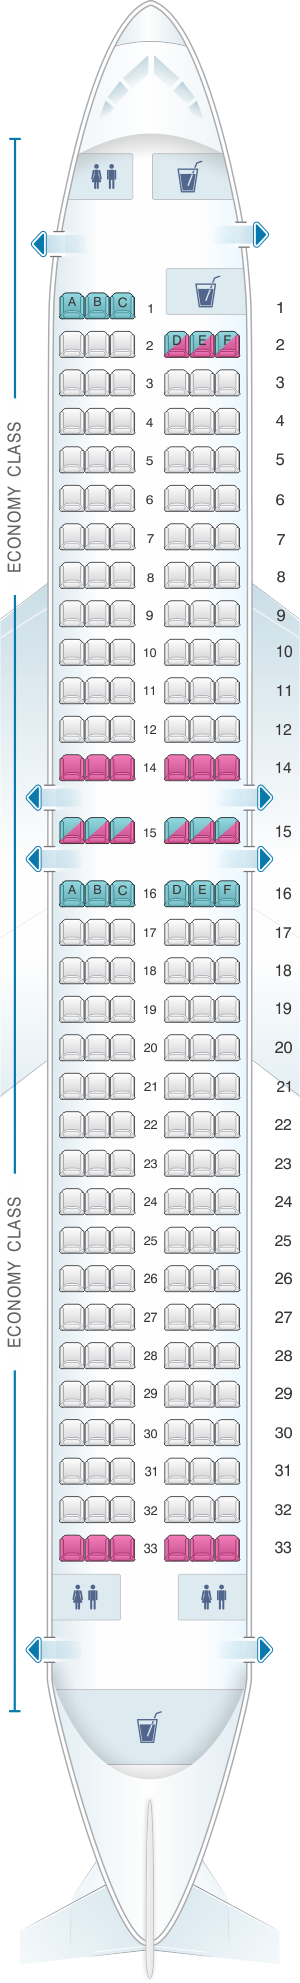 plane seat layout jet2